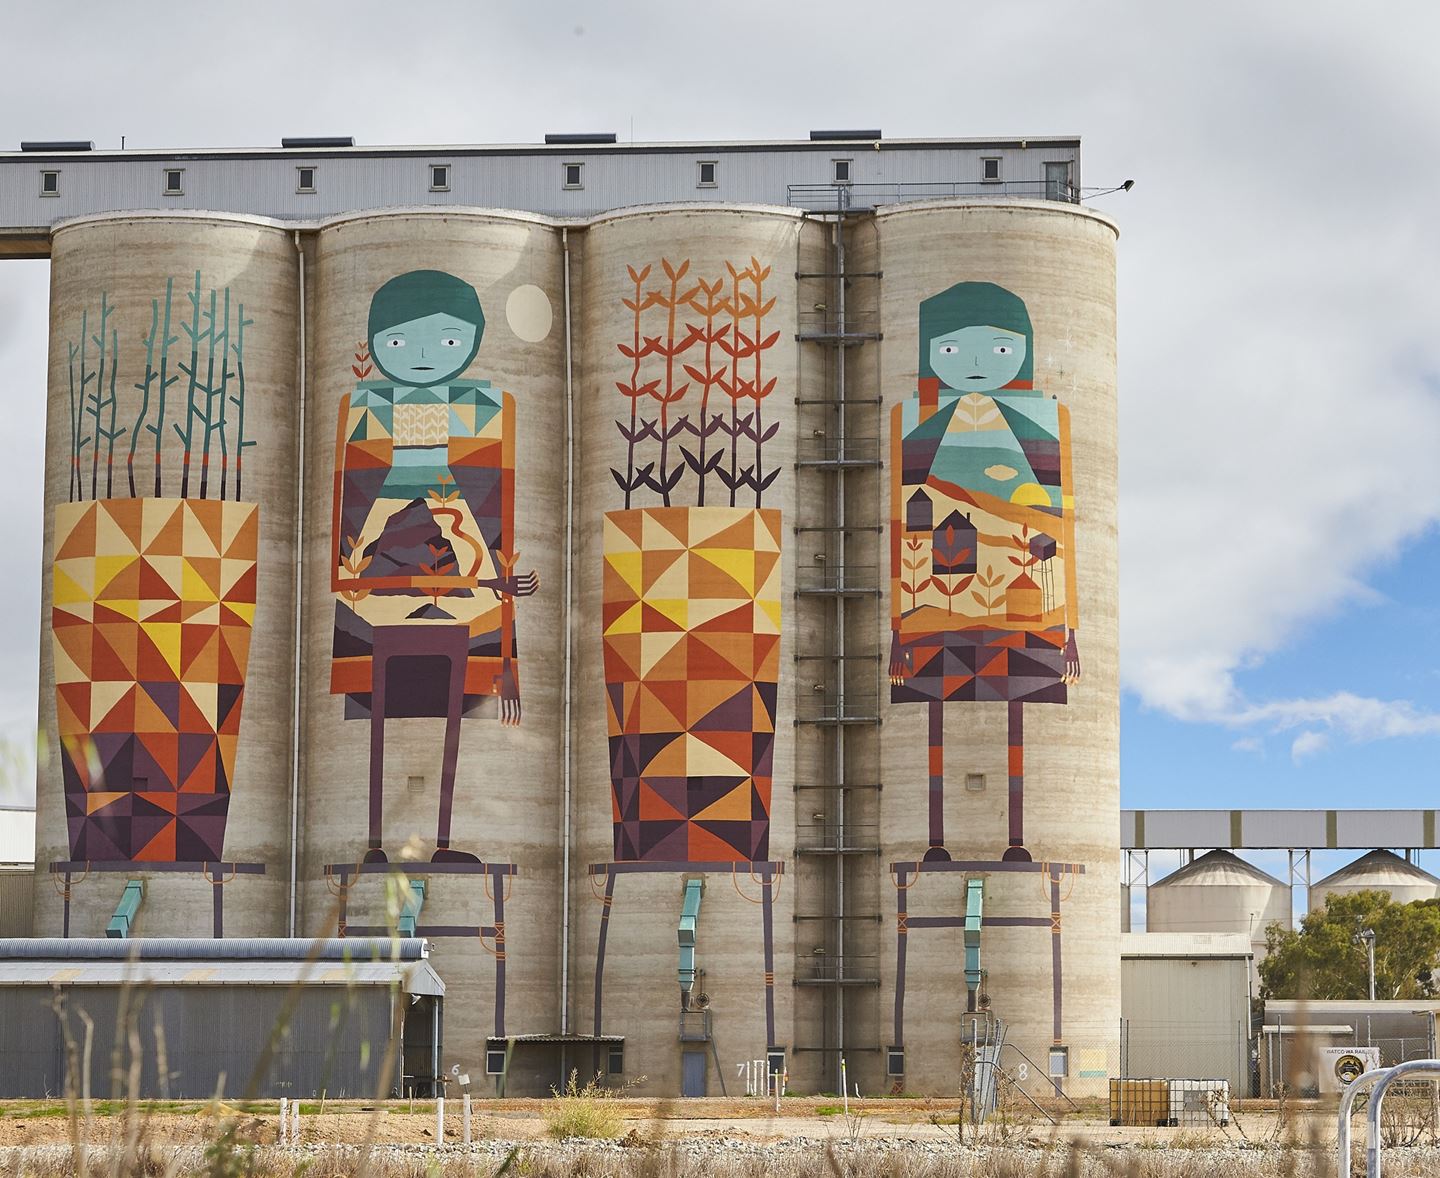 A photo of the silo artwork at the Merredin receival site